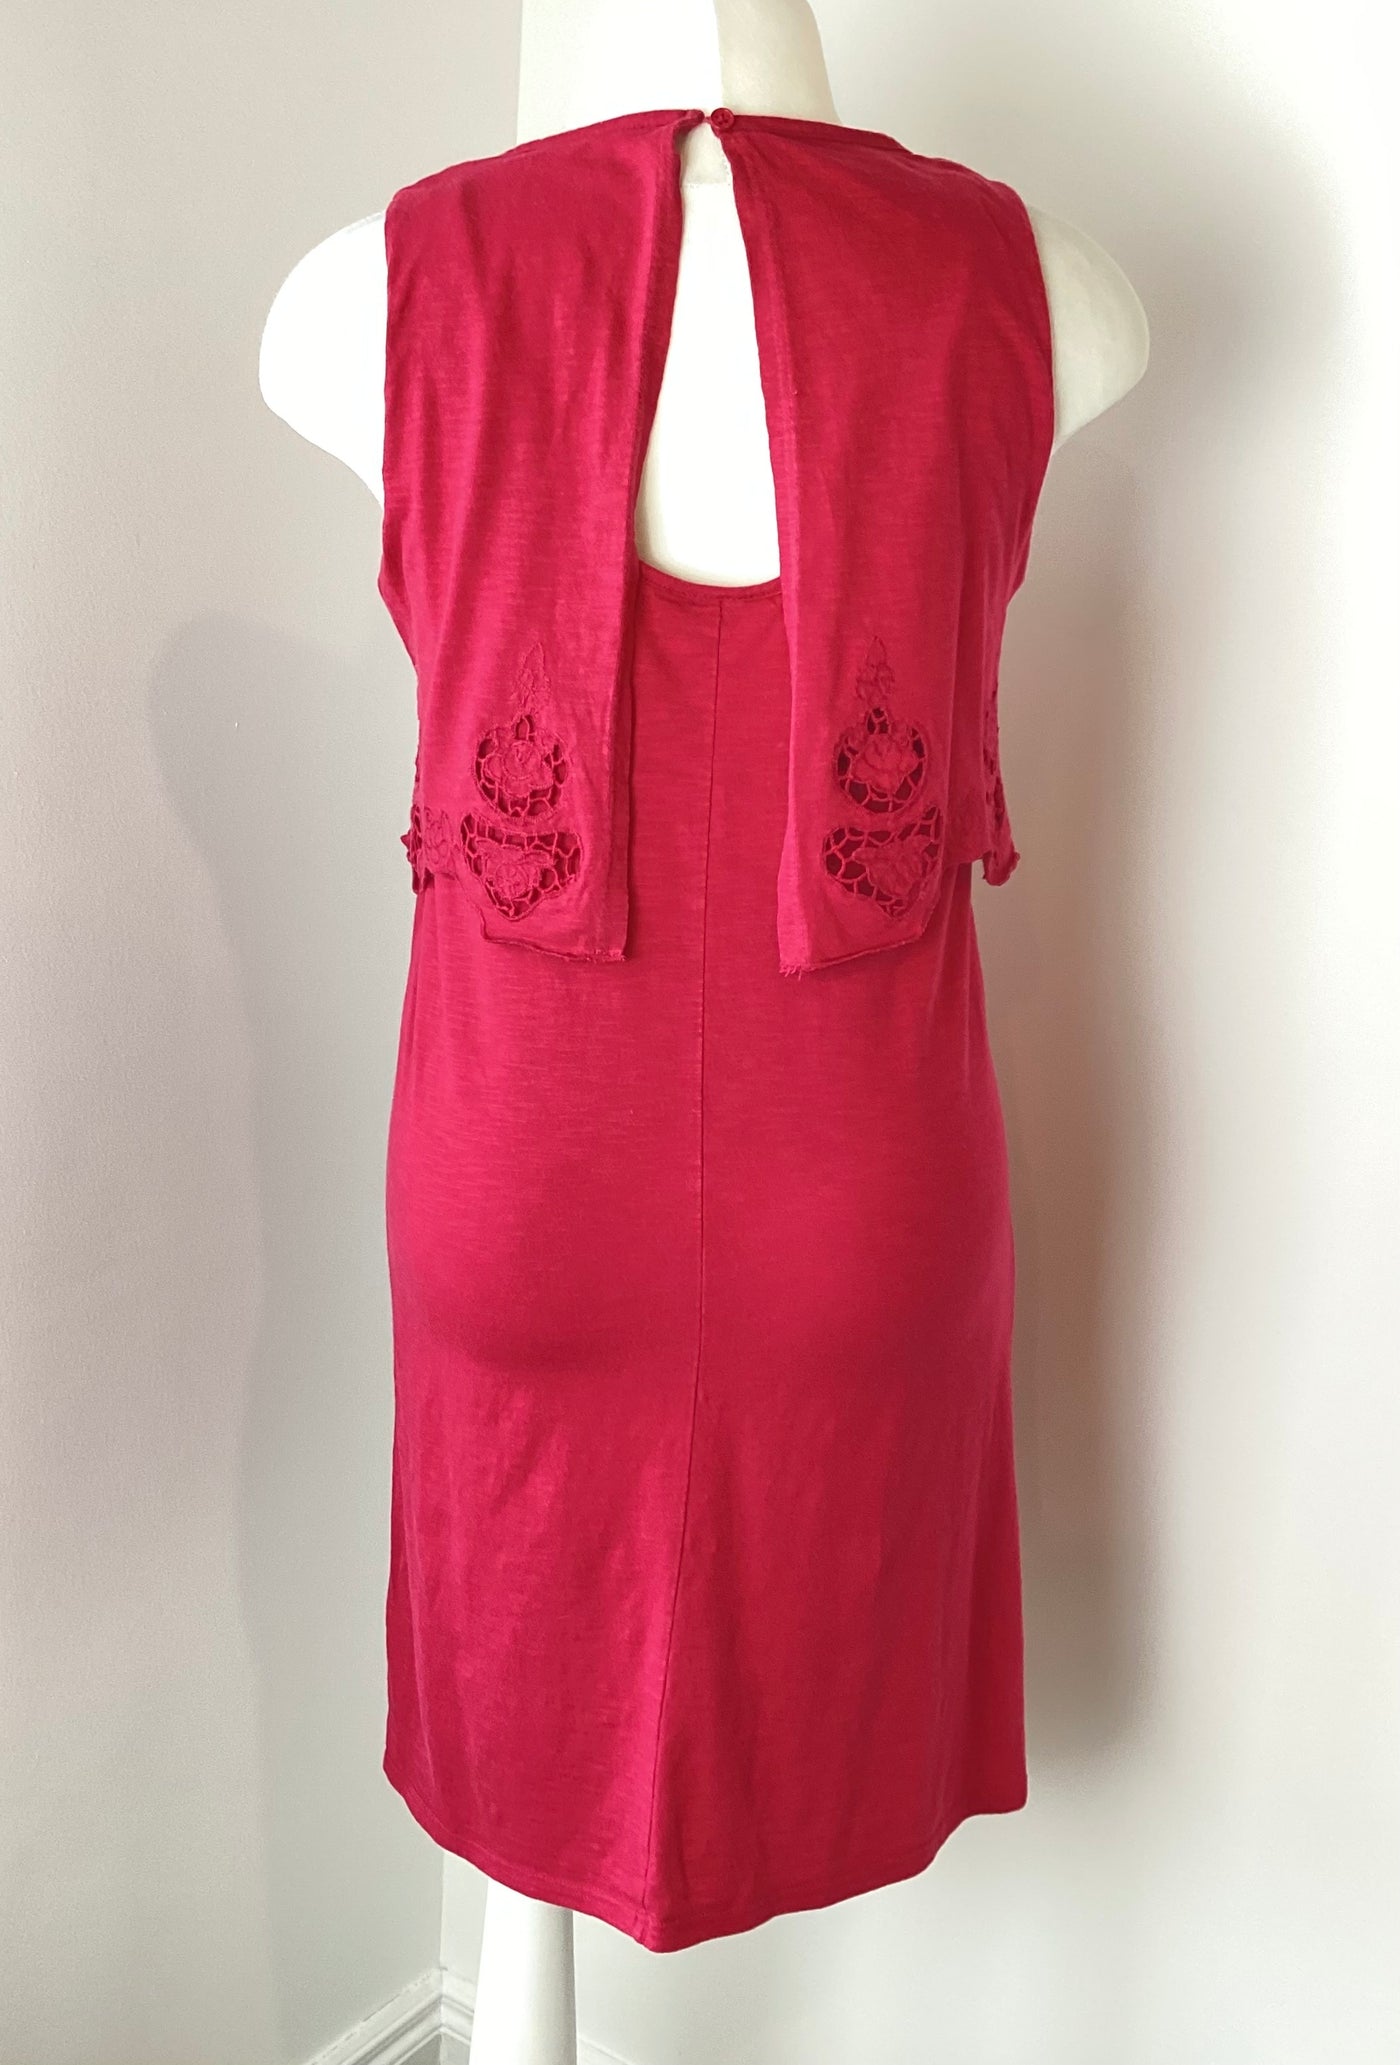 Topshop Maternity raspberry red sleeveless dress - Size 8